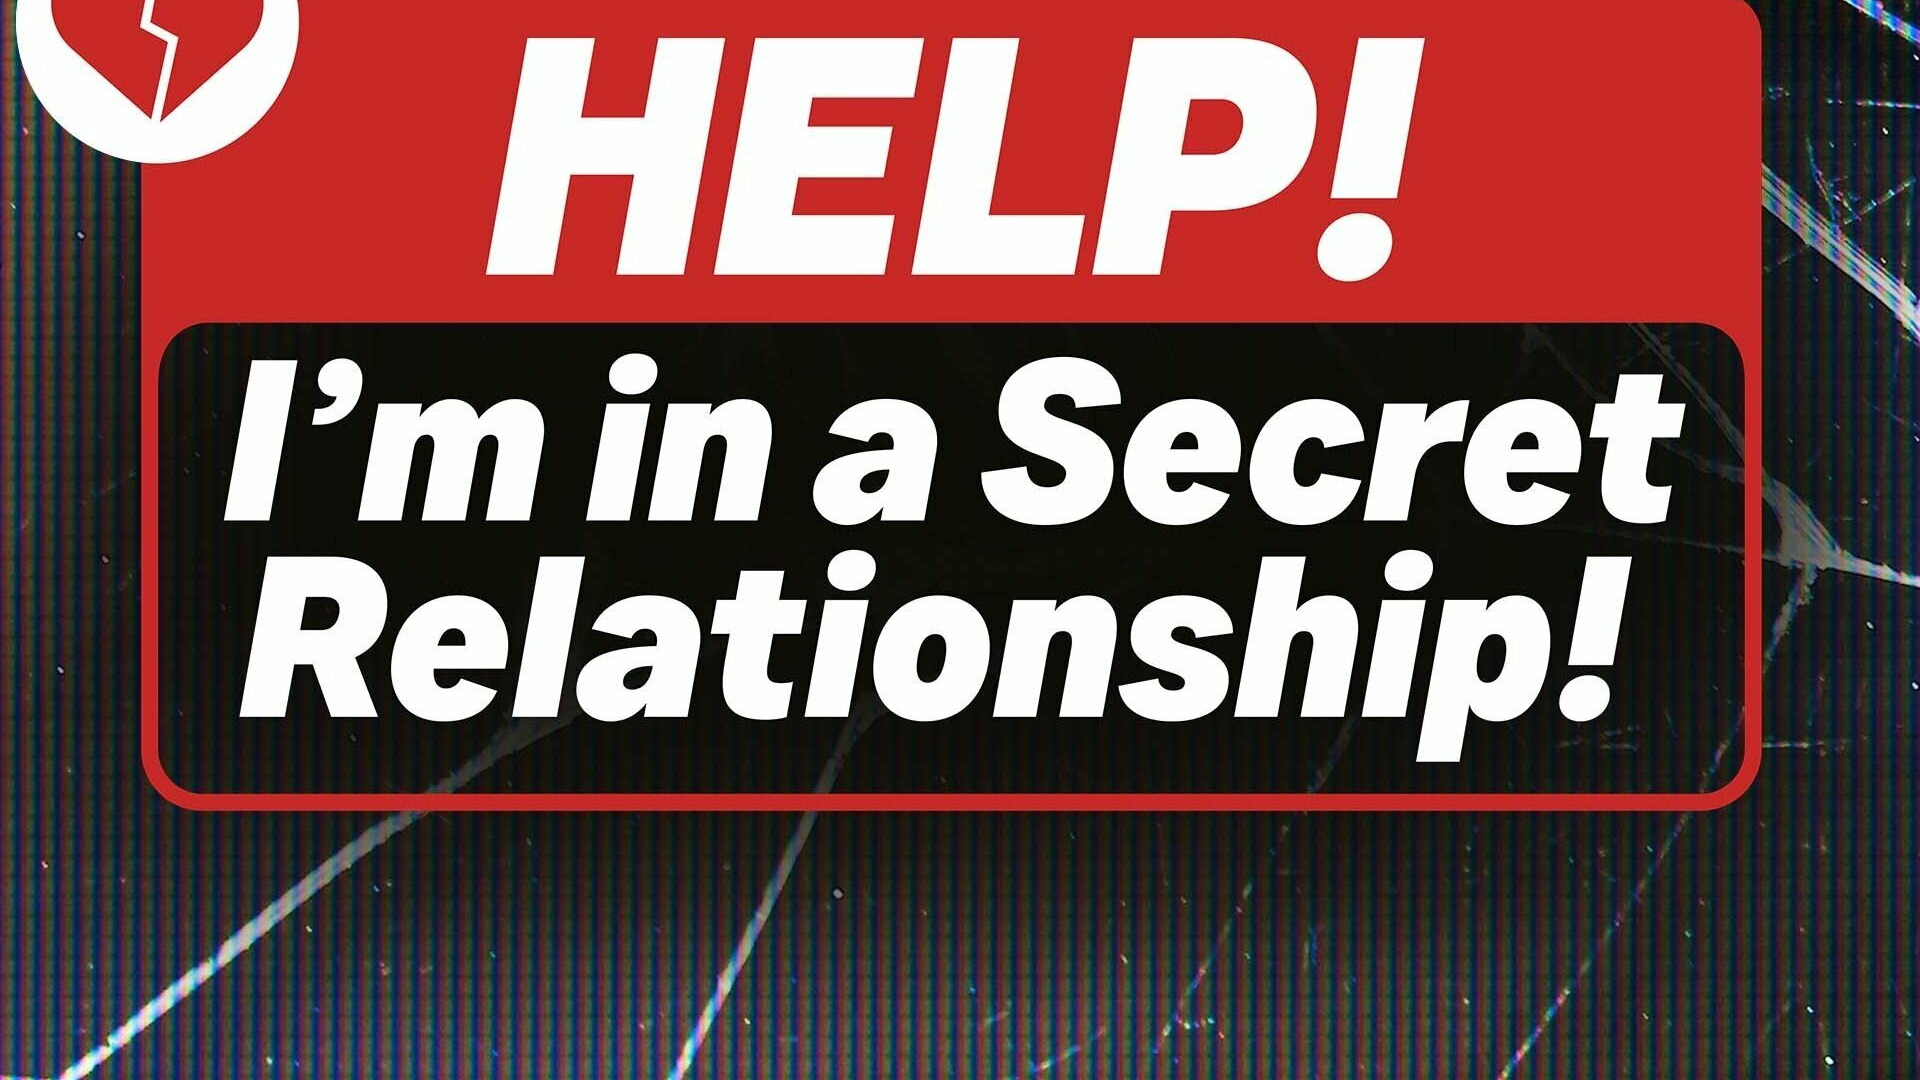 Show Help! I'm in a Secret Relationship!